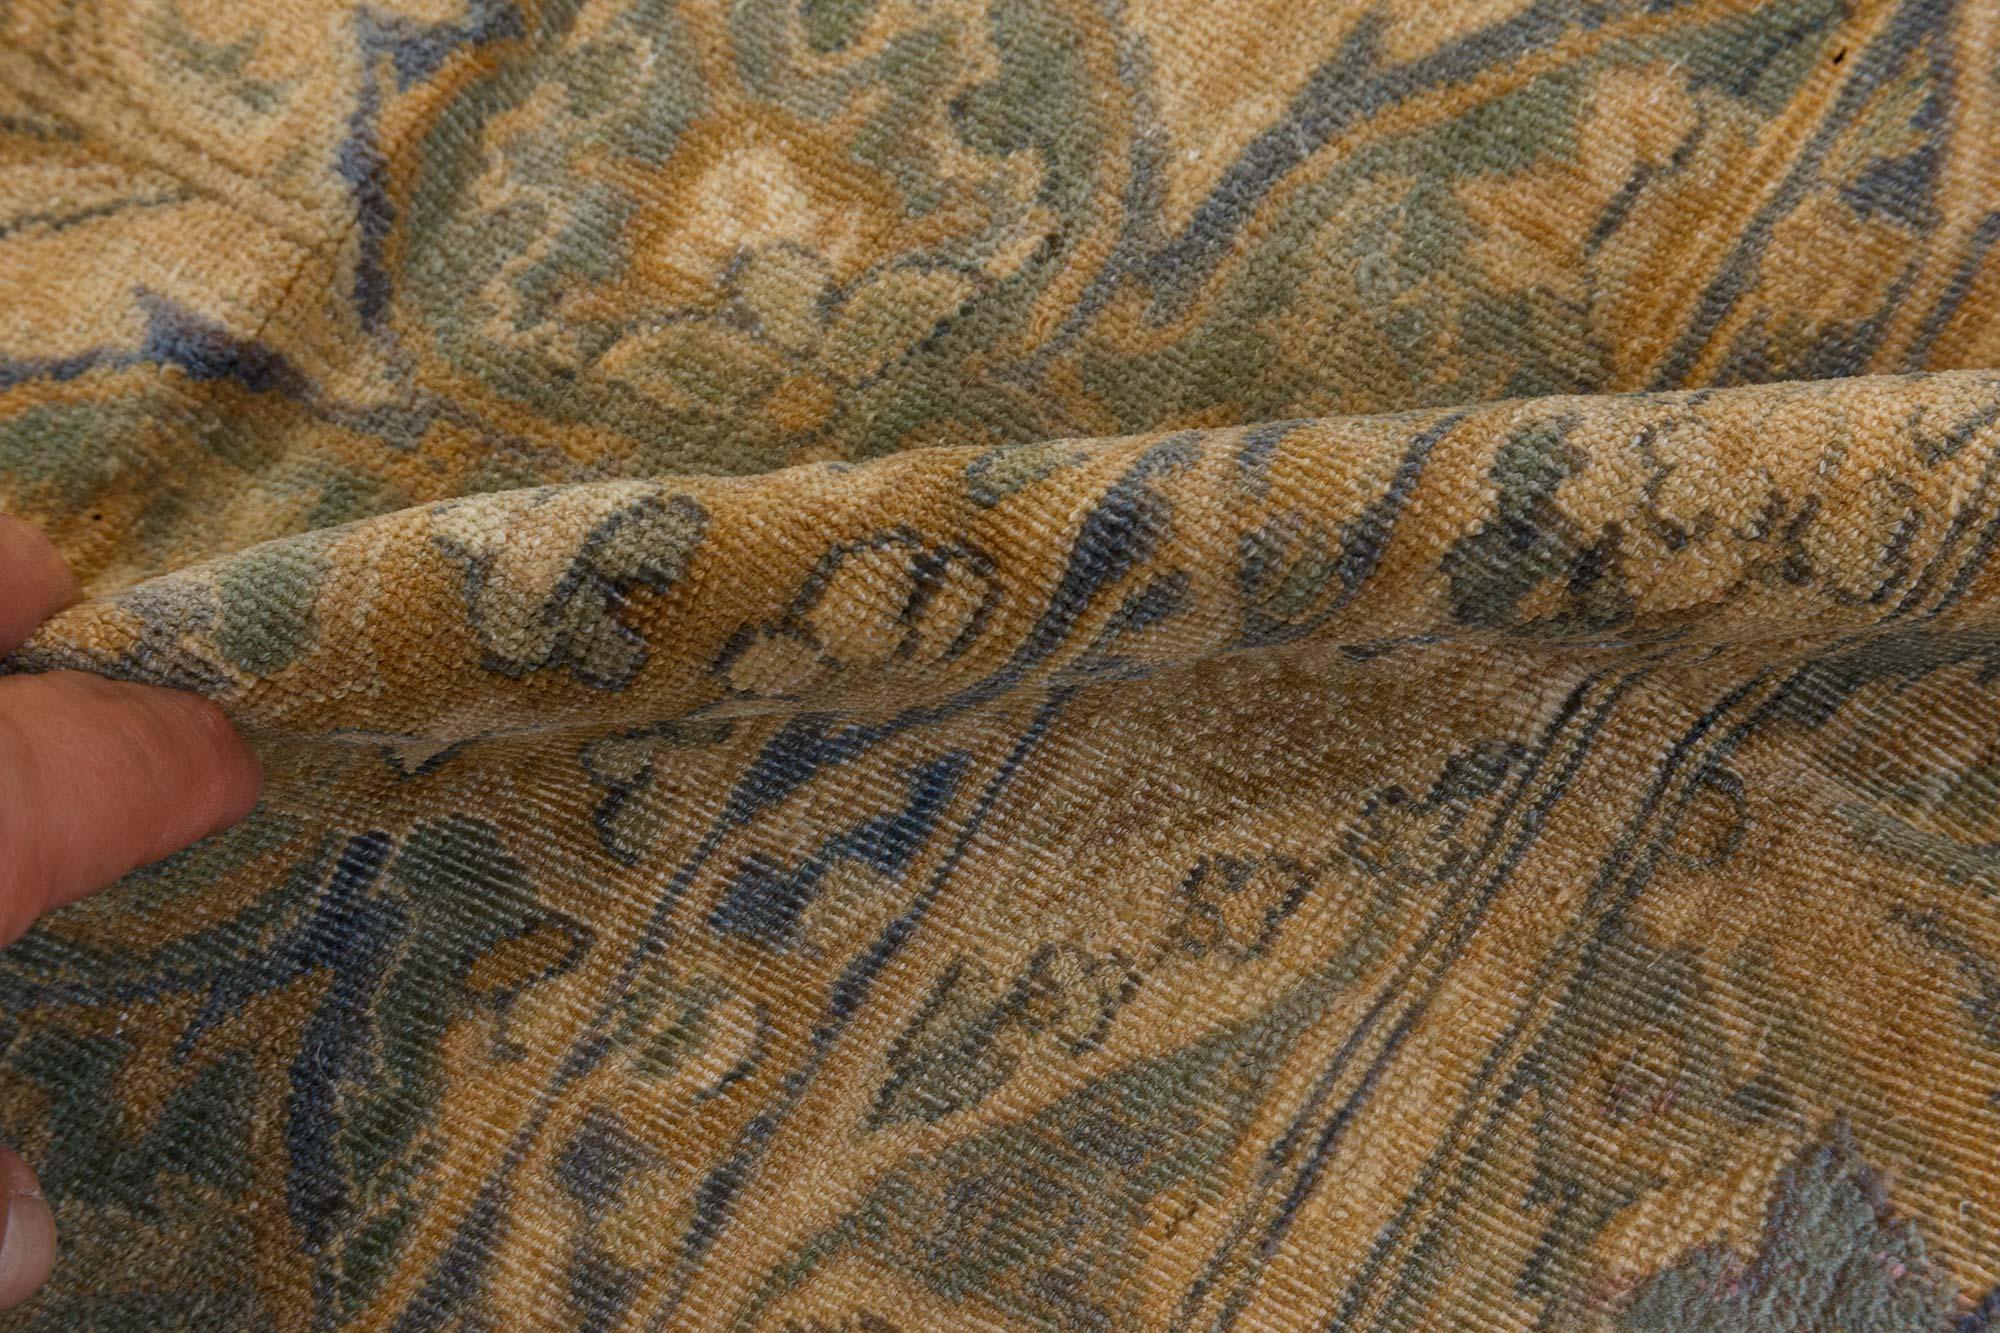 Authentic 1900s Persian Kirman Handmade Wool Rug
Size: 9'7